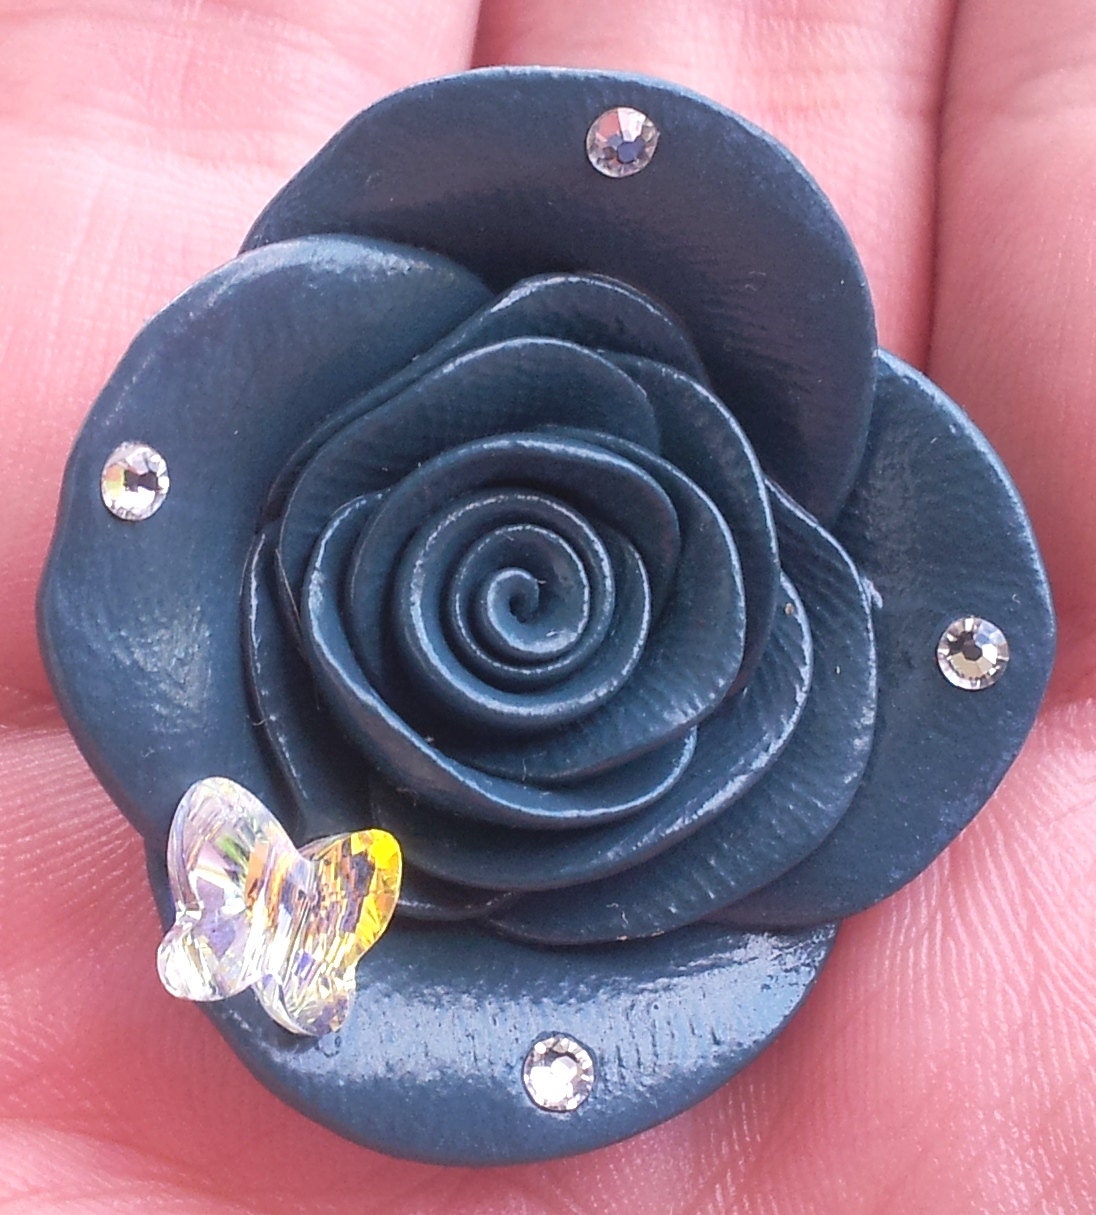 Stunning Blue Rose Ring (Swarovski) Jewelry - EleganceOfAntonio